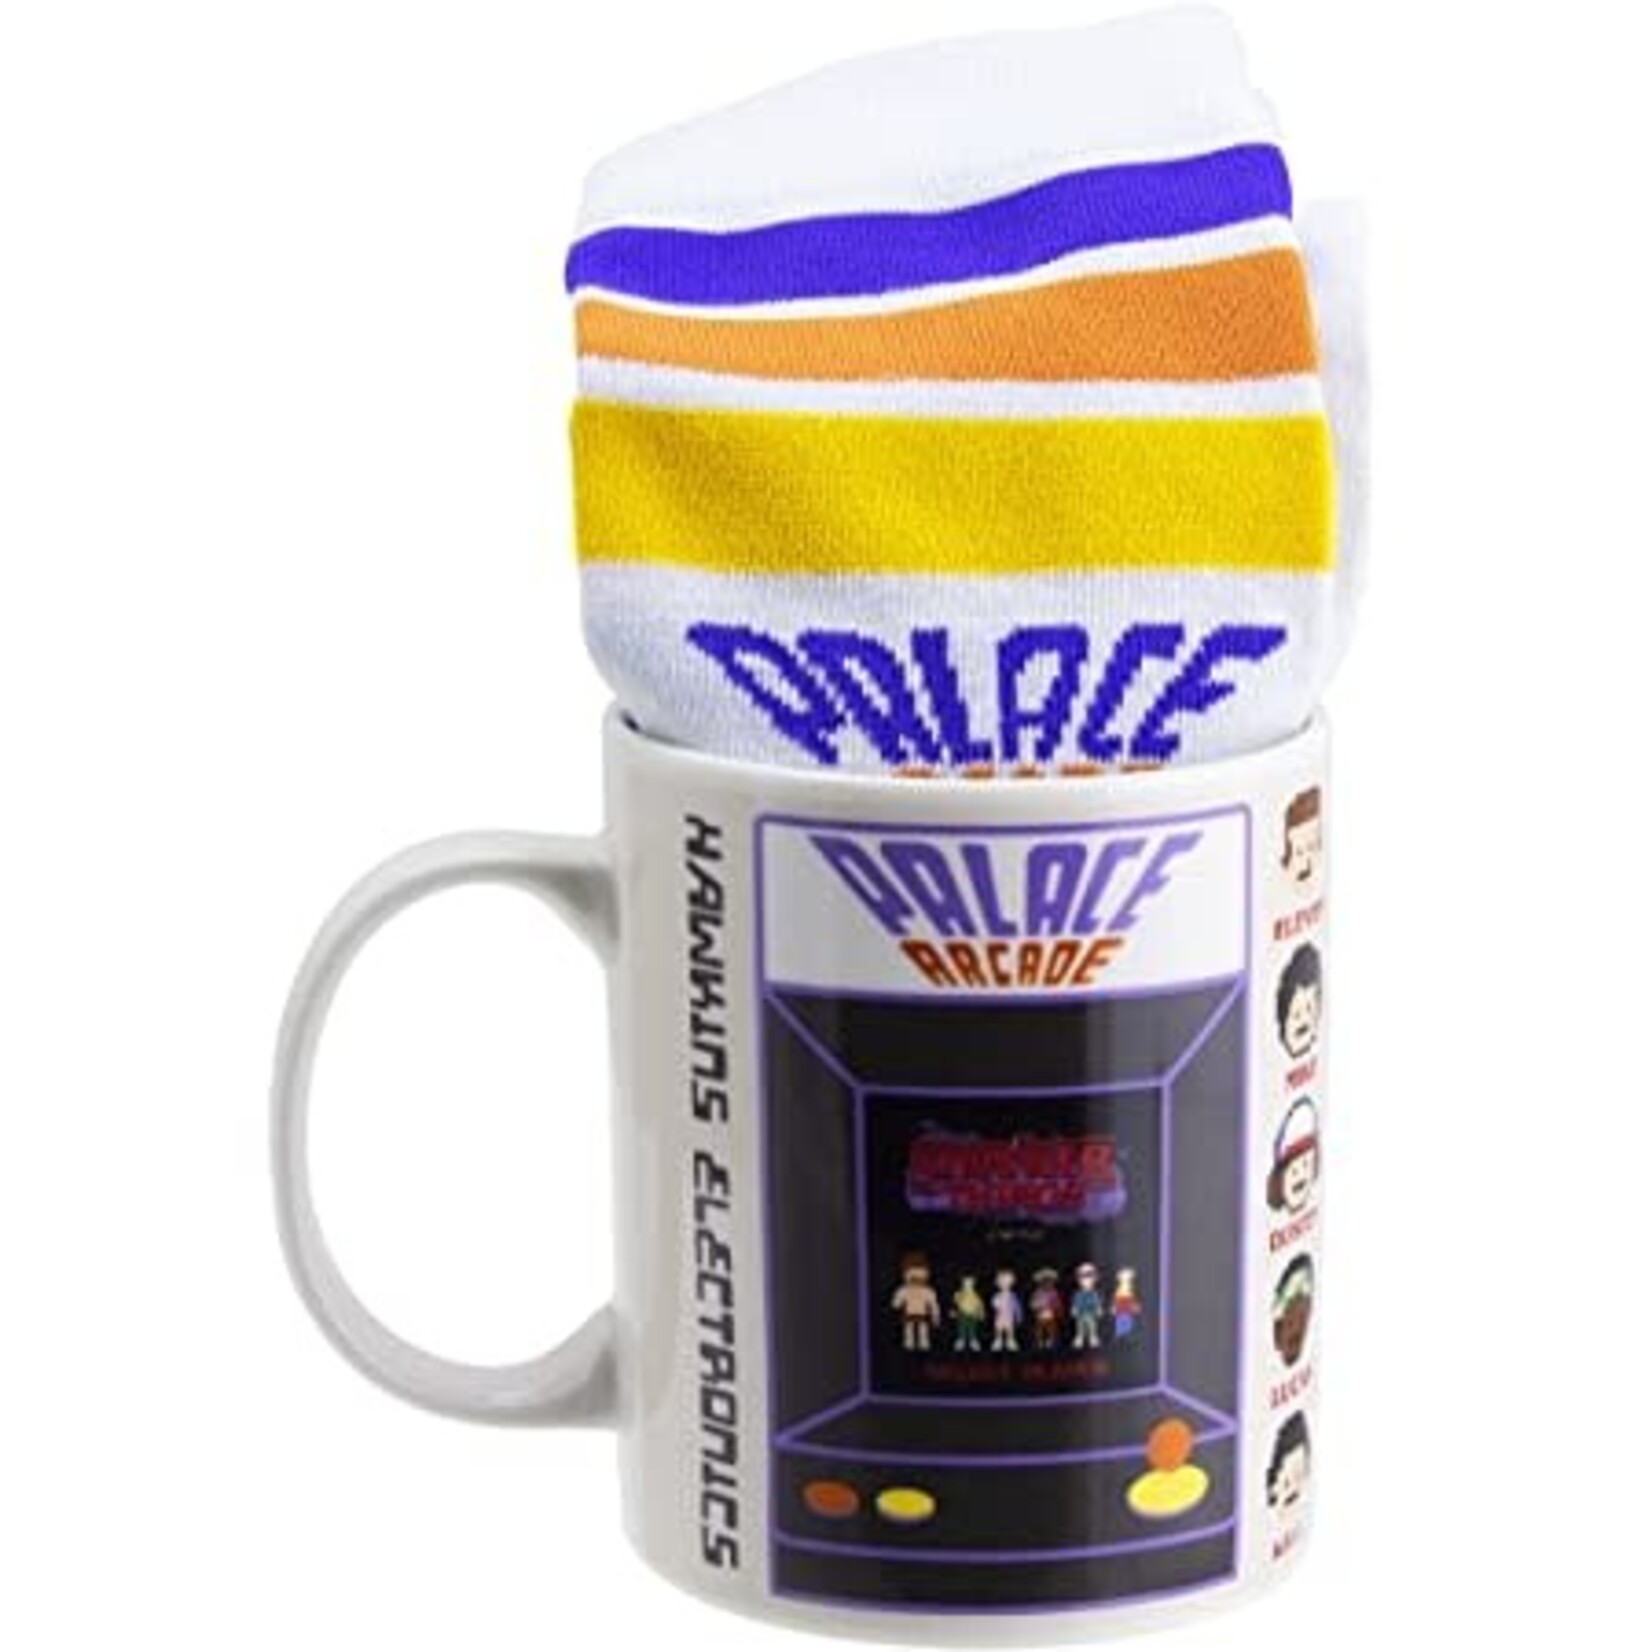 Stranger Things Stranger Things - Coffee Mug and Socks